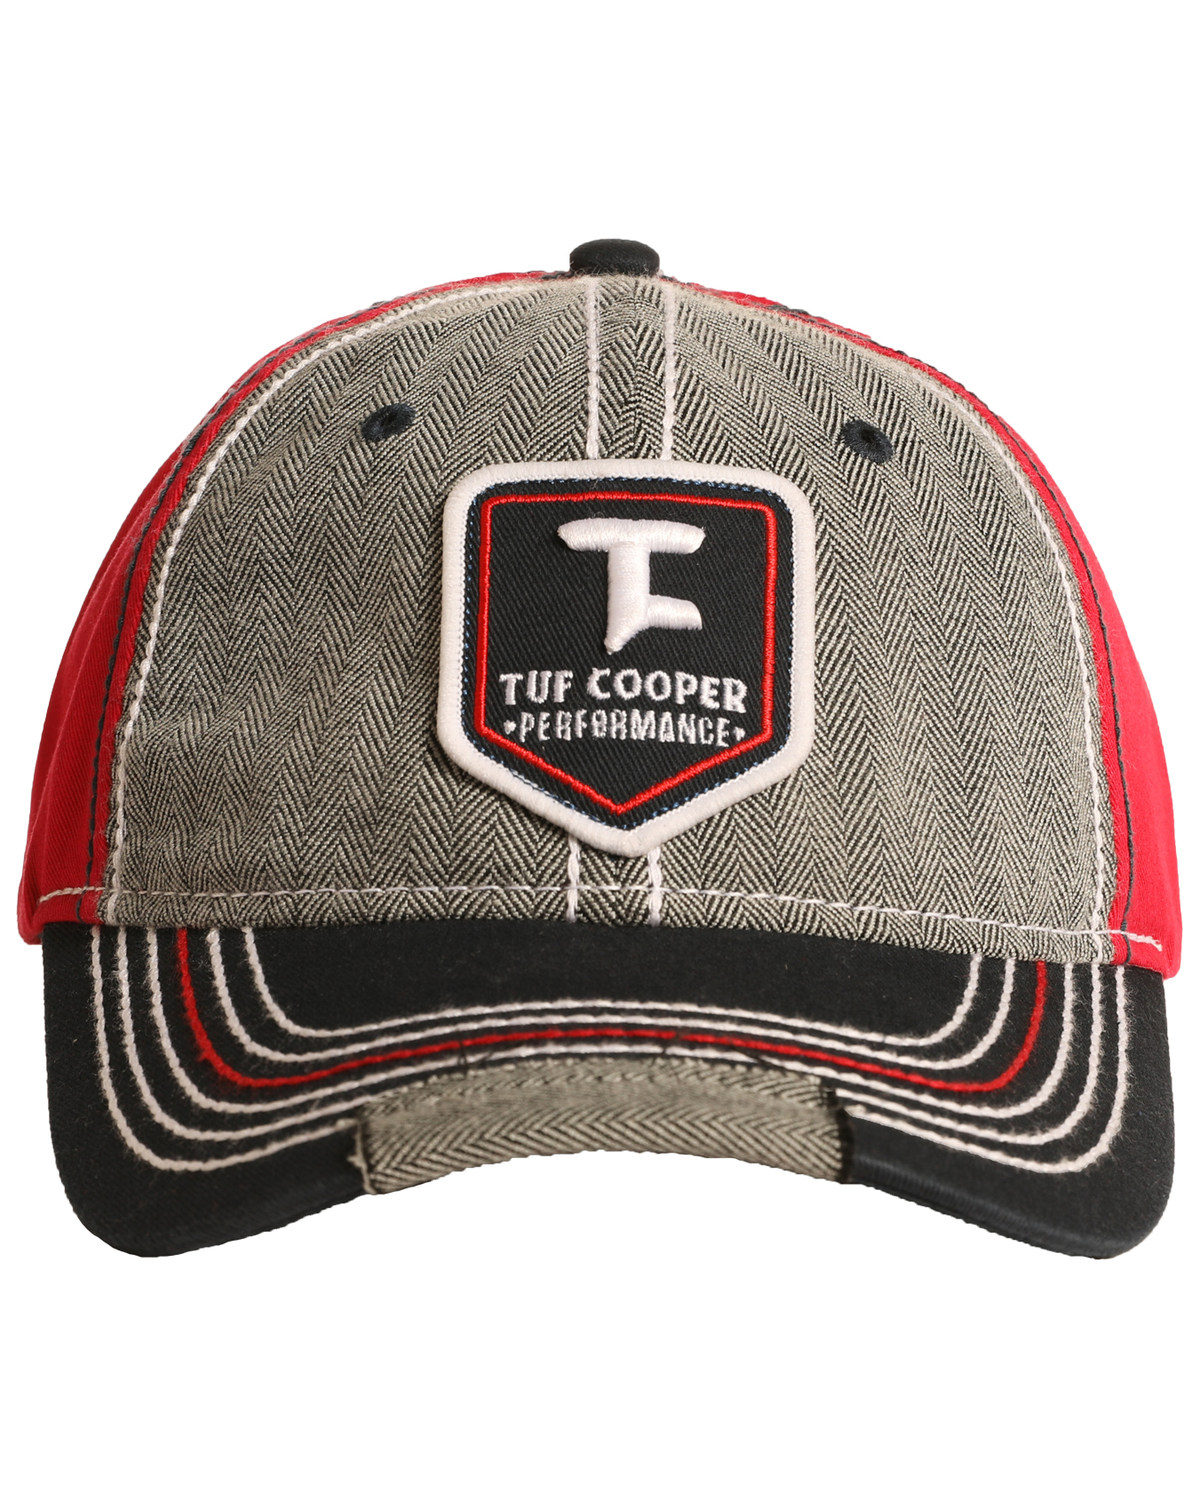 Tuf Cooper Performance Men's Emblem Patch Baseball Cap